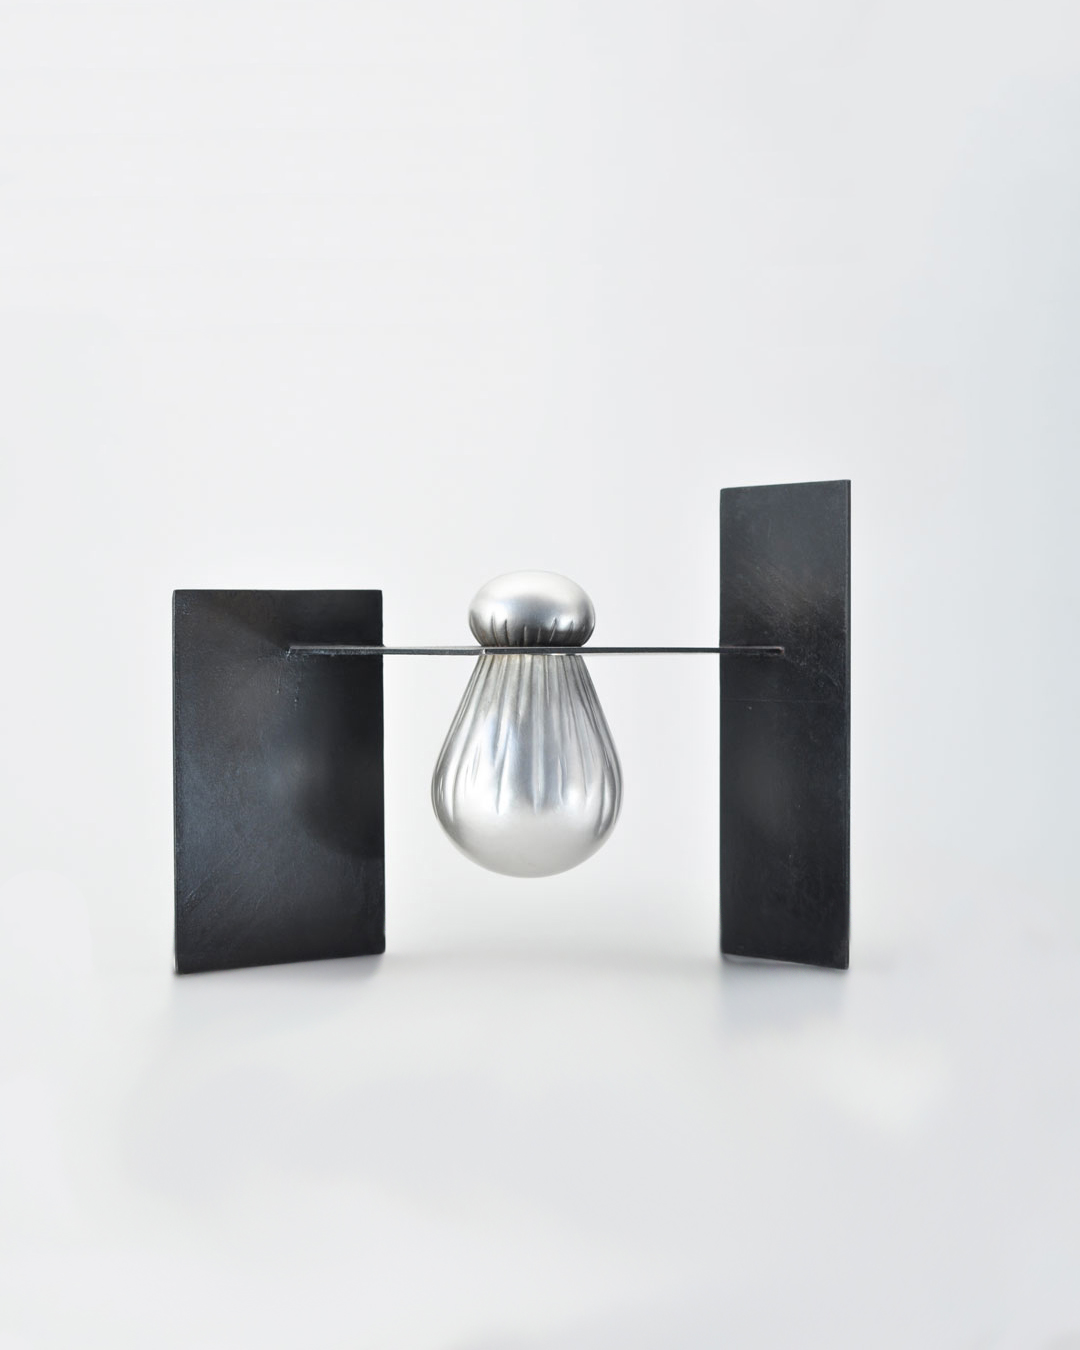 Anders Ljungberg, Bag Beneath, 2019, object; silver, steel, 325 x 260 x 270 mm, €7020